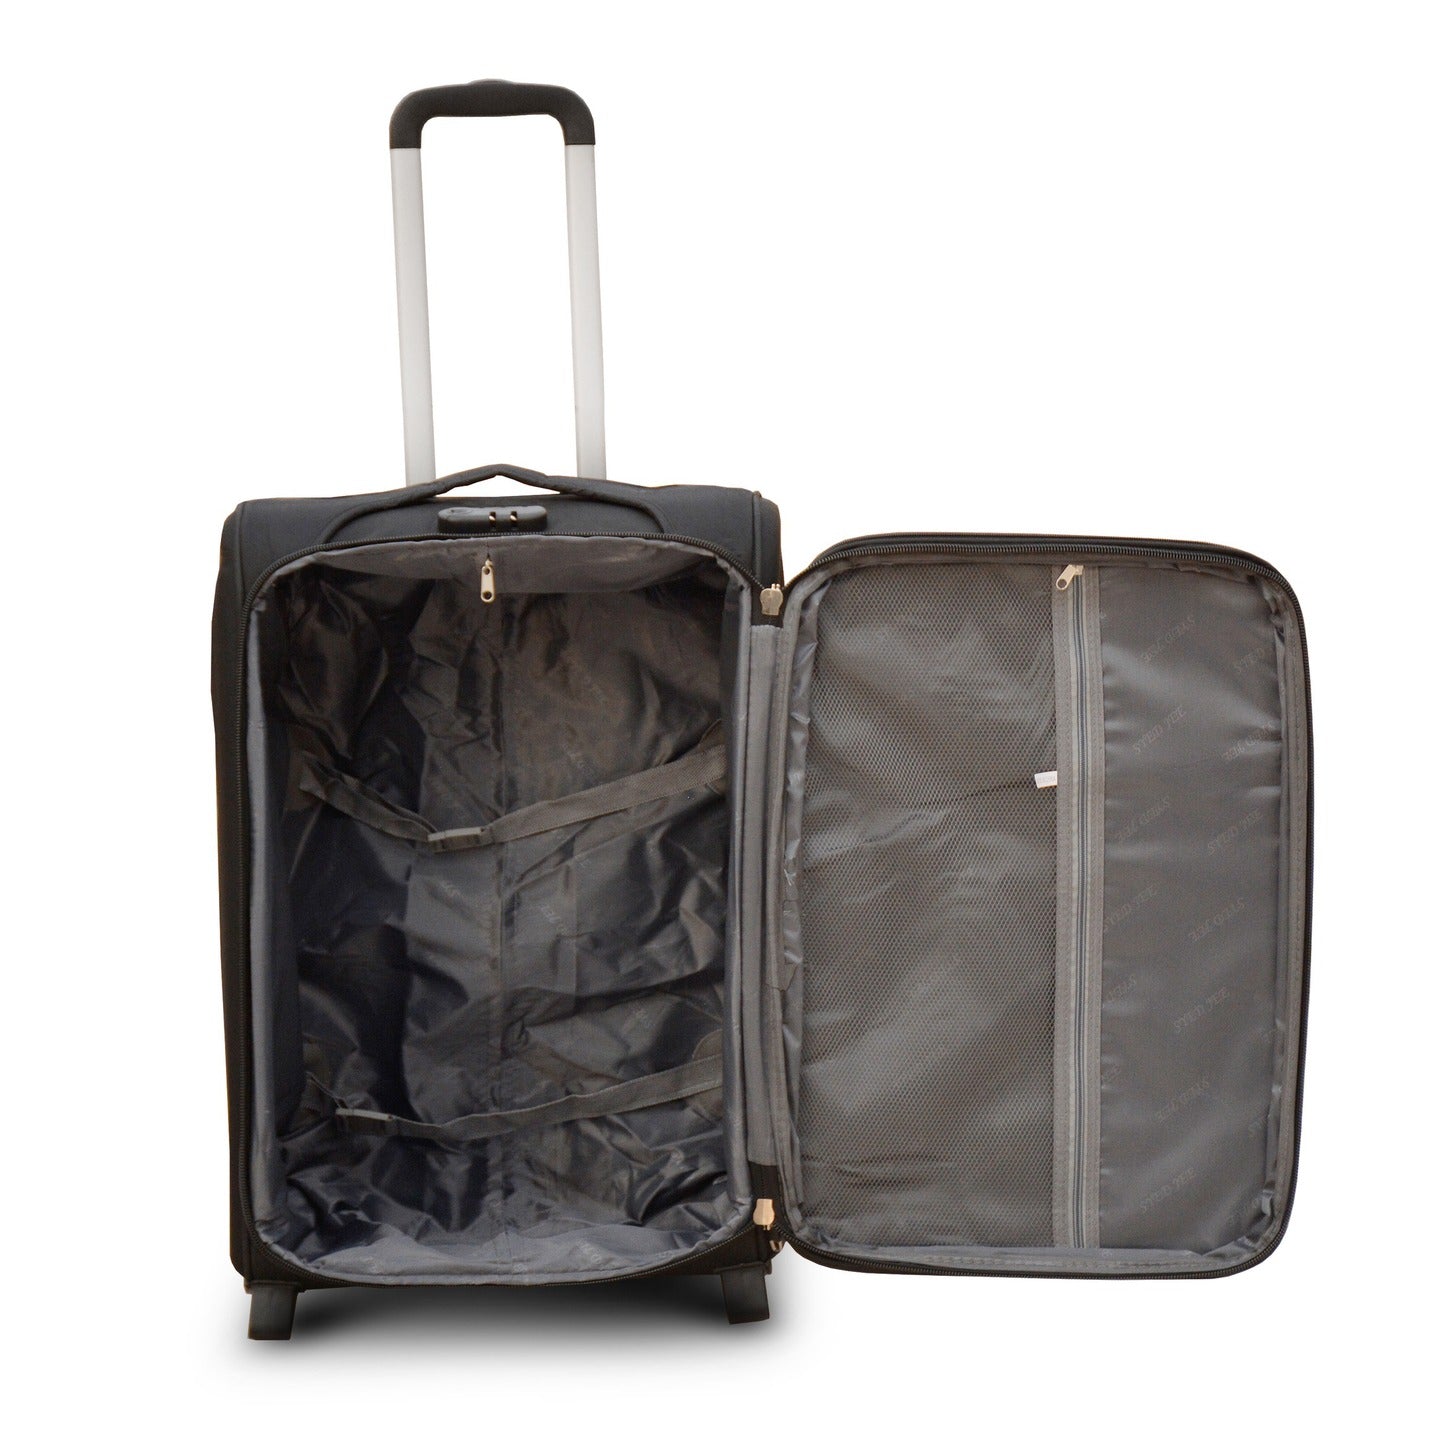 24" Black Colour SJ JIAN 2 Wheel Luggage Lightweight Soft Material Trolley Bag